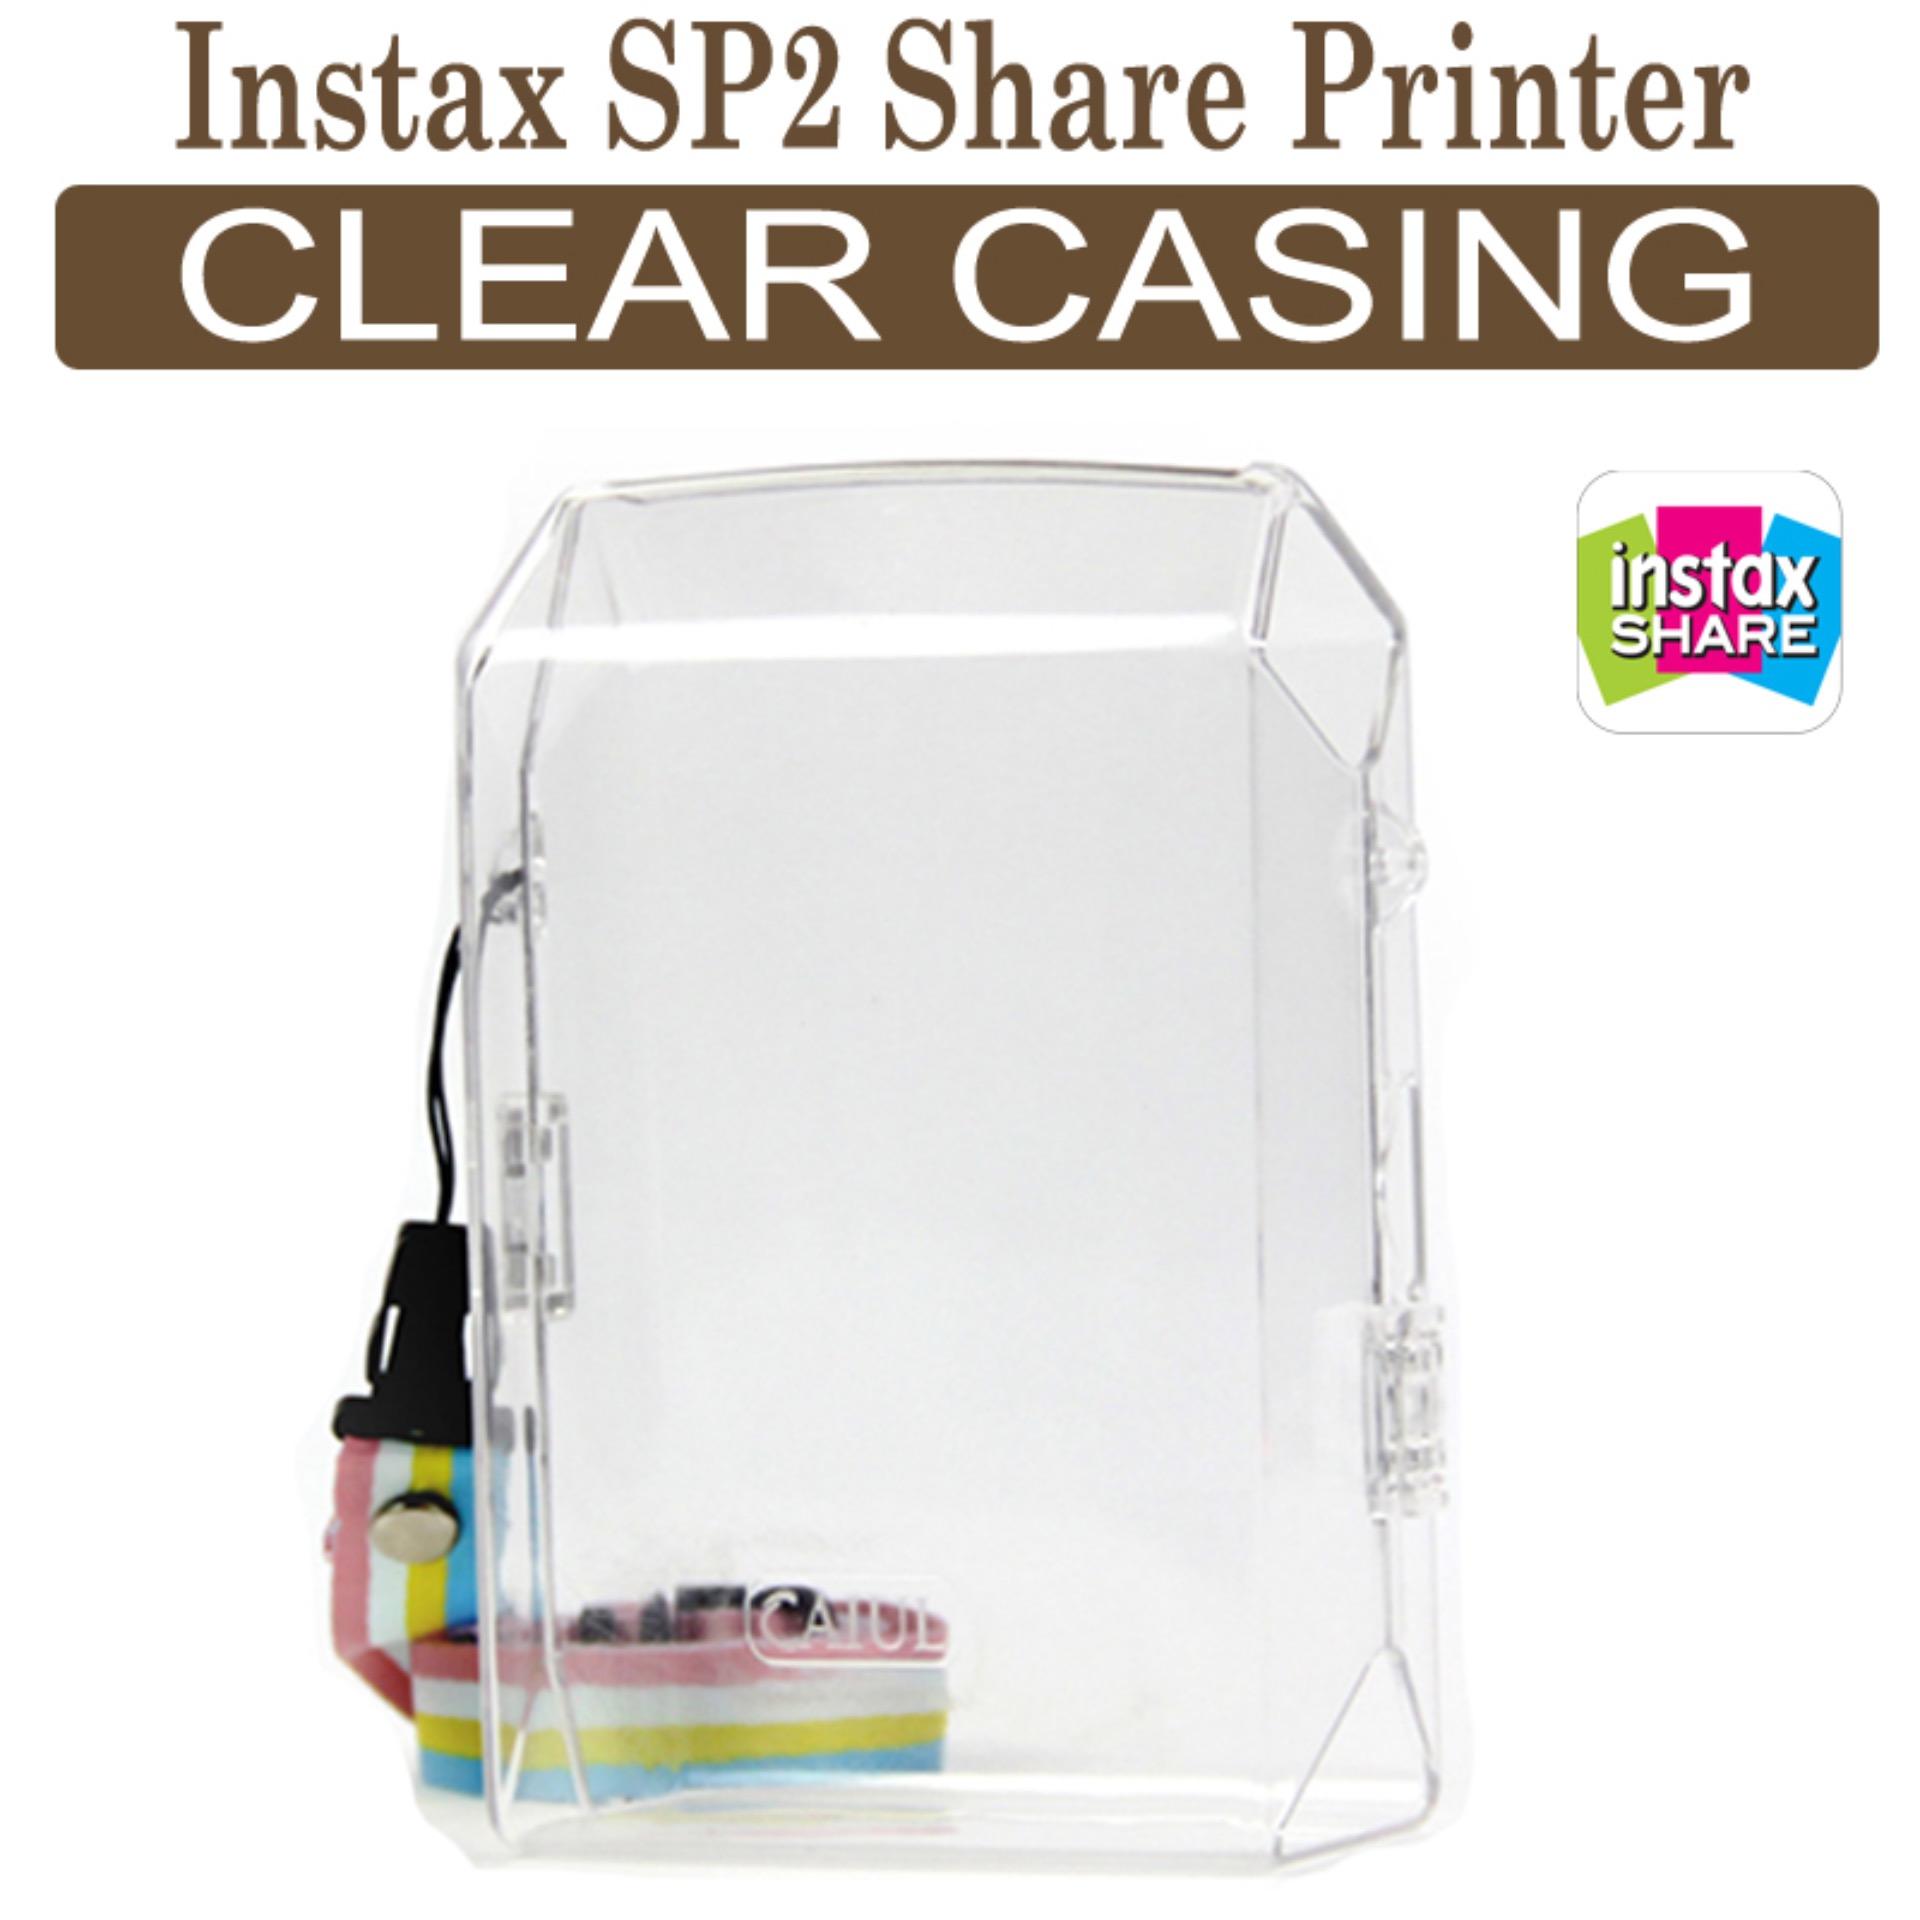 Fujifilm Instax Share SP2 Printer Clear Casing